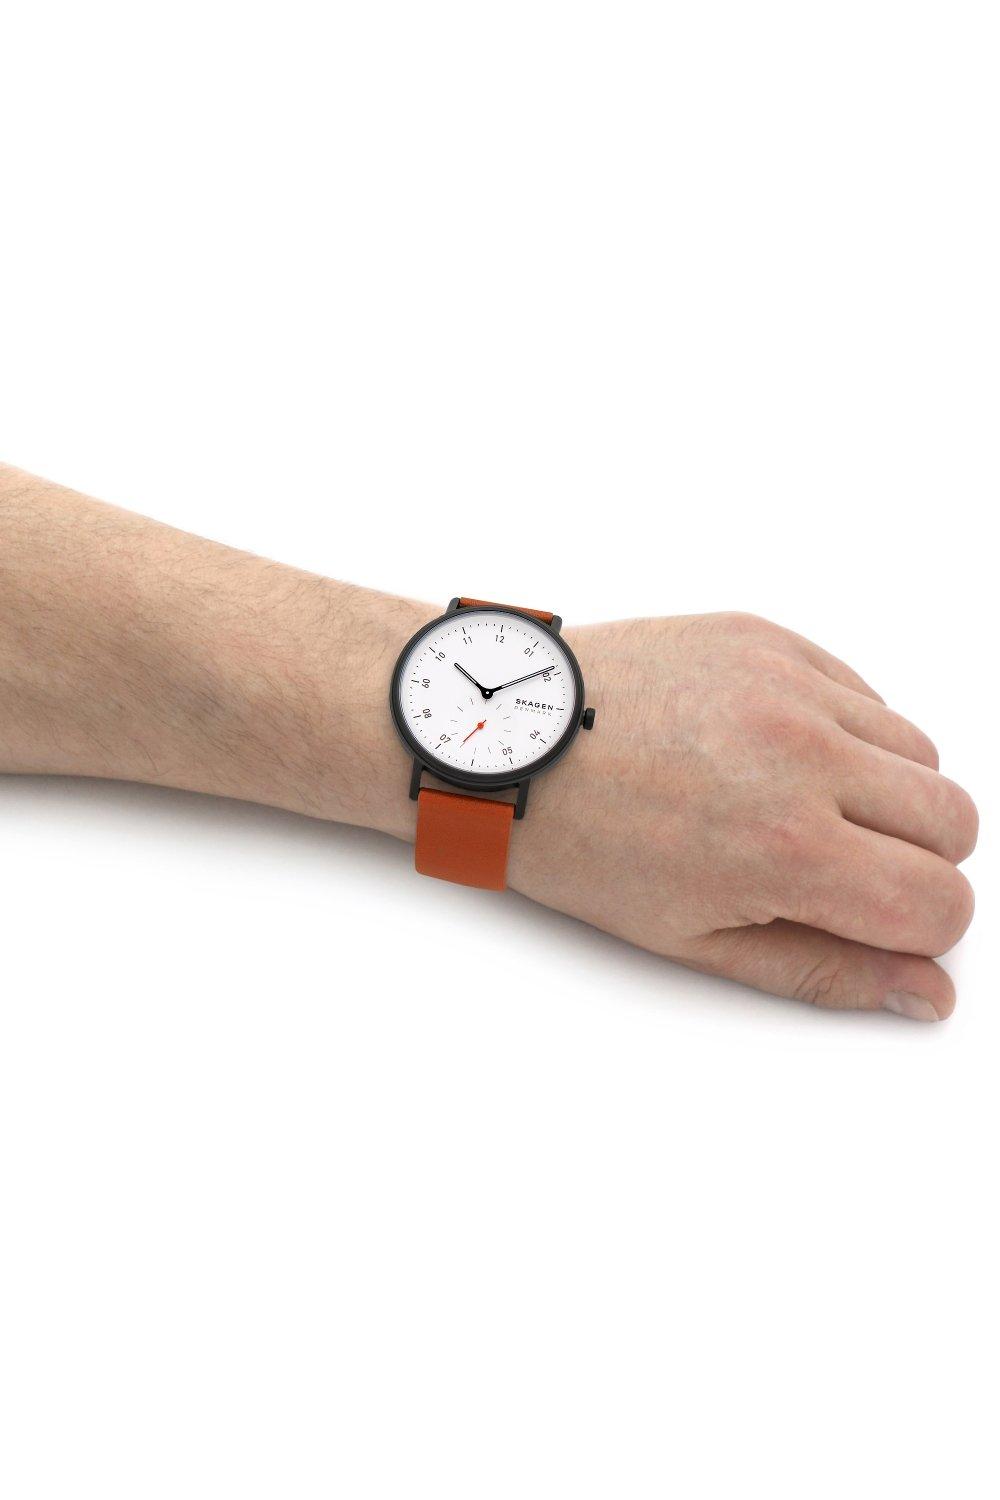 Watches | Kuppel Stainless Steel Classic Analogue Quartz Watch - Skw6889 |  Skagen